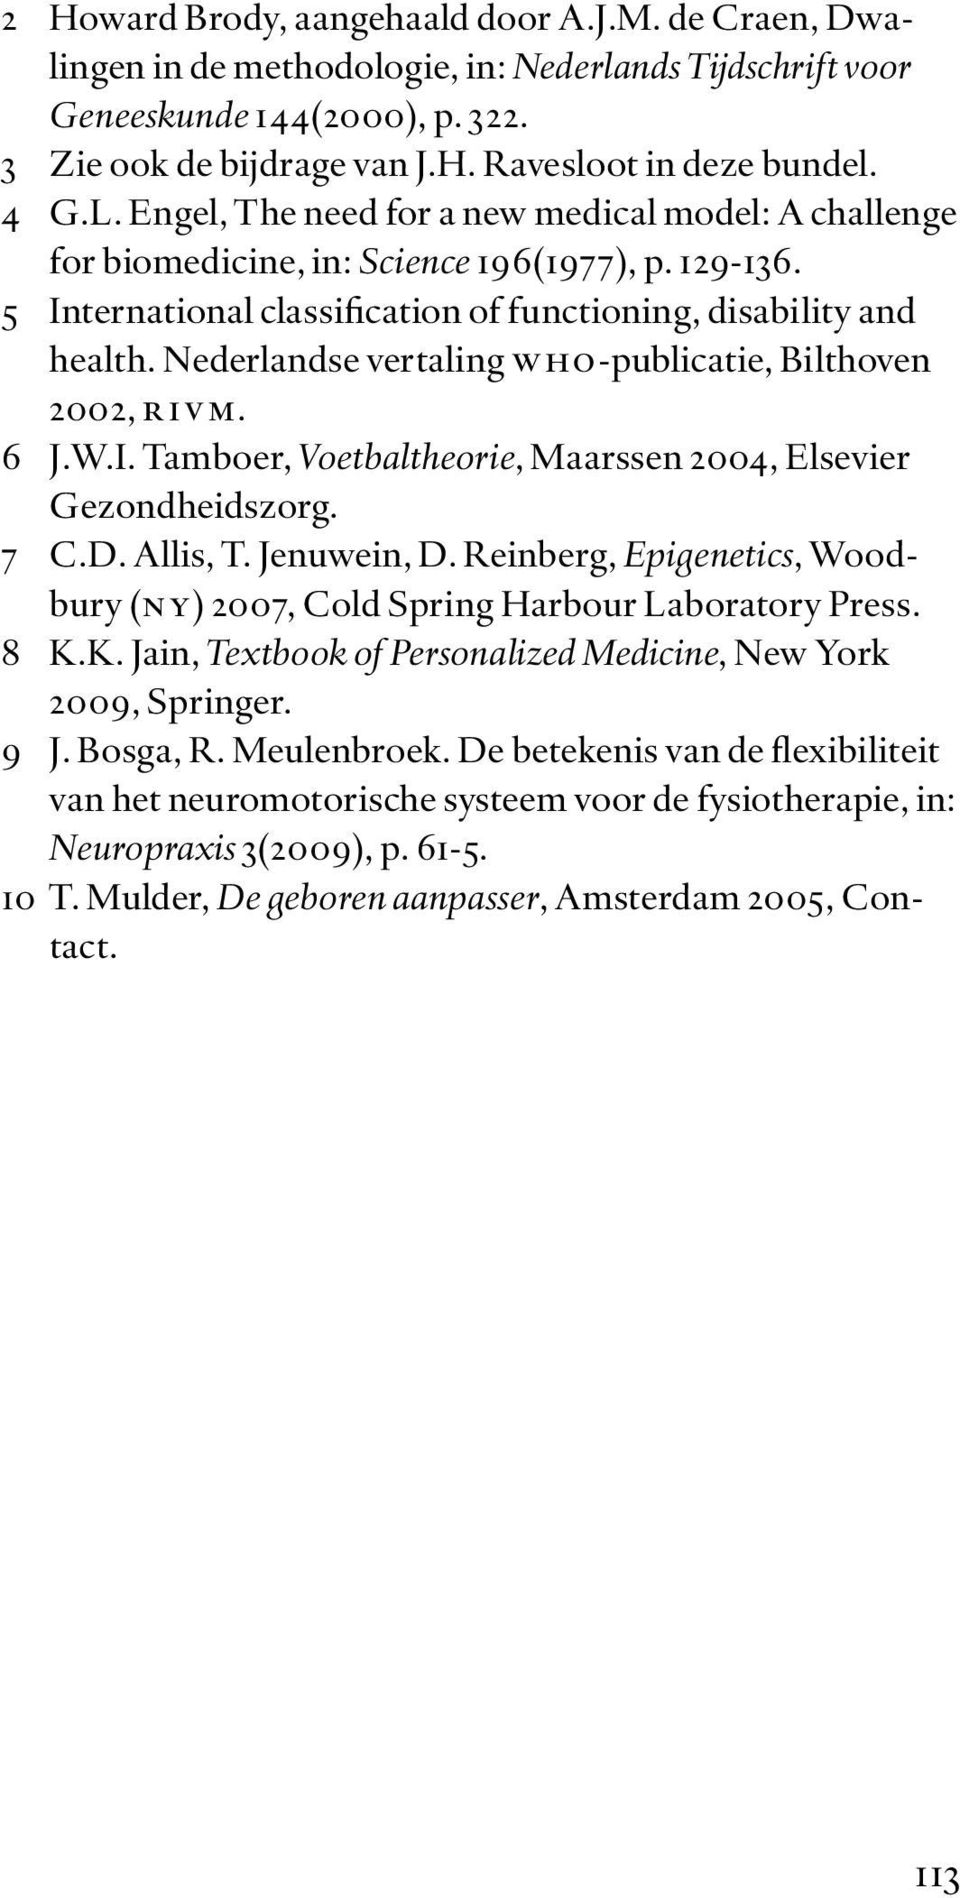 Nederlandse vertaling who-publicatie, Bilthoven 2002, rivm. 6 J.W.I. Tamboer, Voetbaltheorie, Maarssen 2004, Elsevier Gezondheidszorg. 7 C.D. Allis, T. Jenuwein, D.